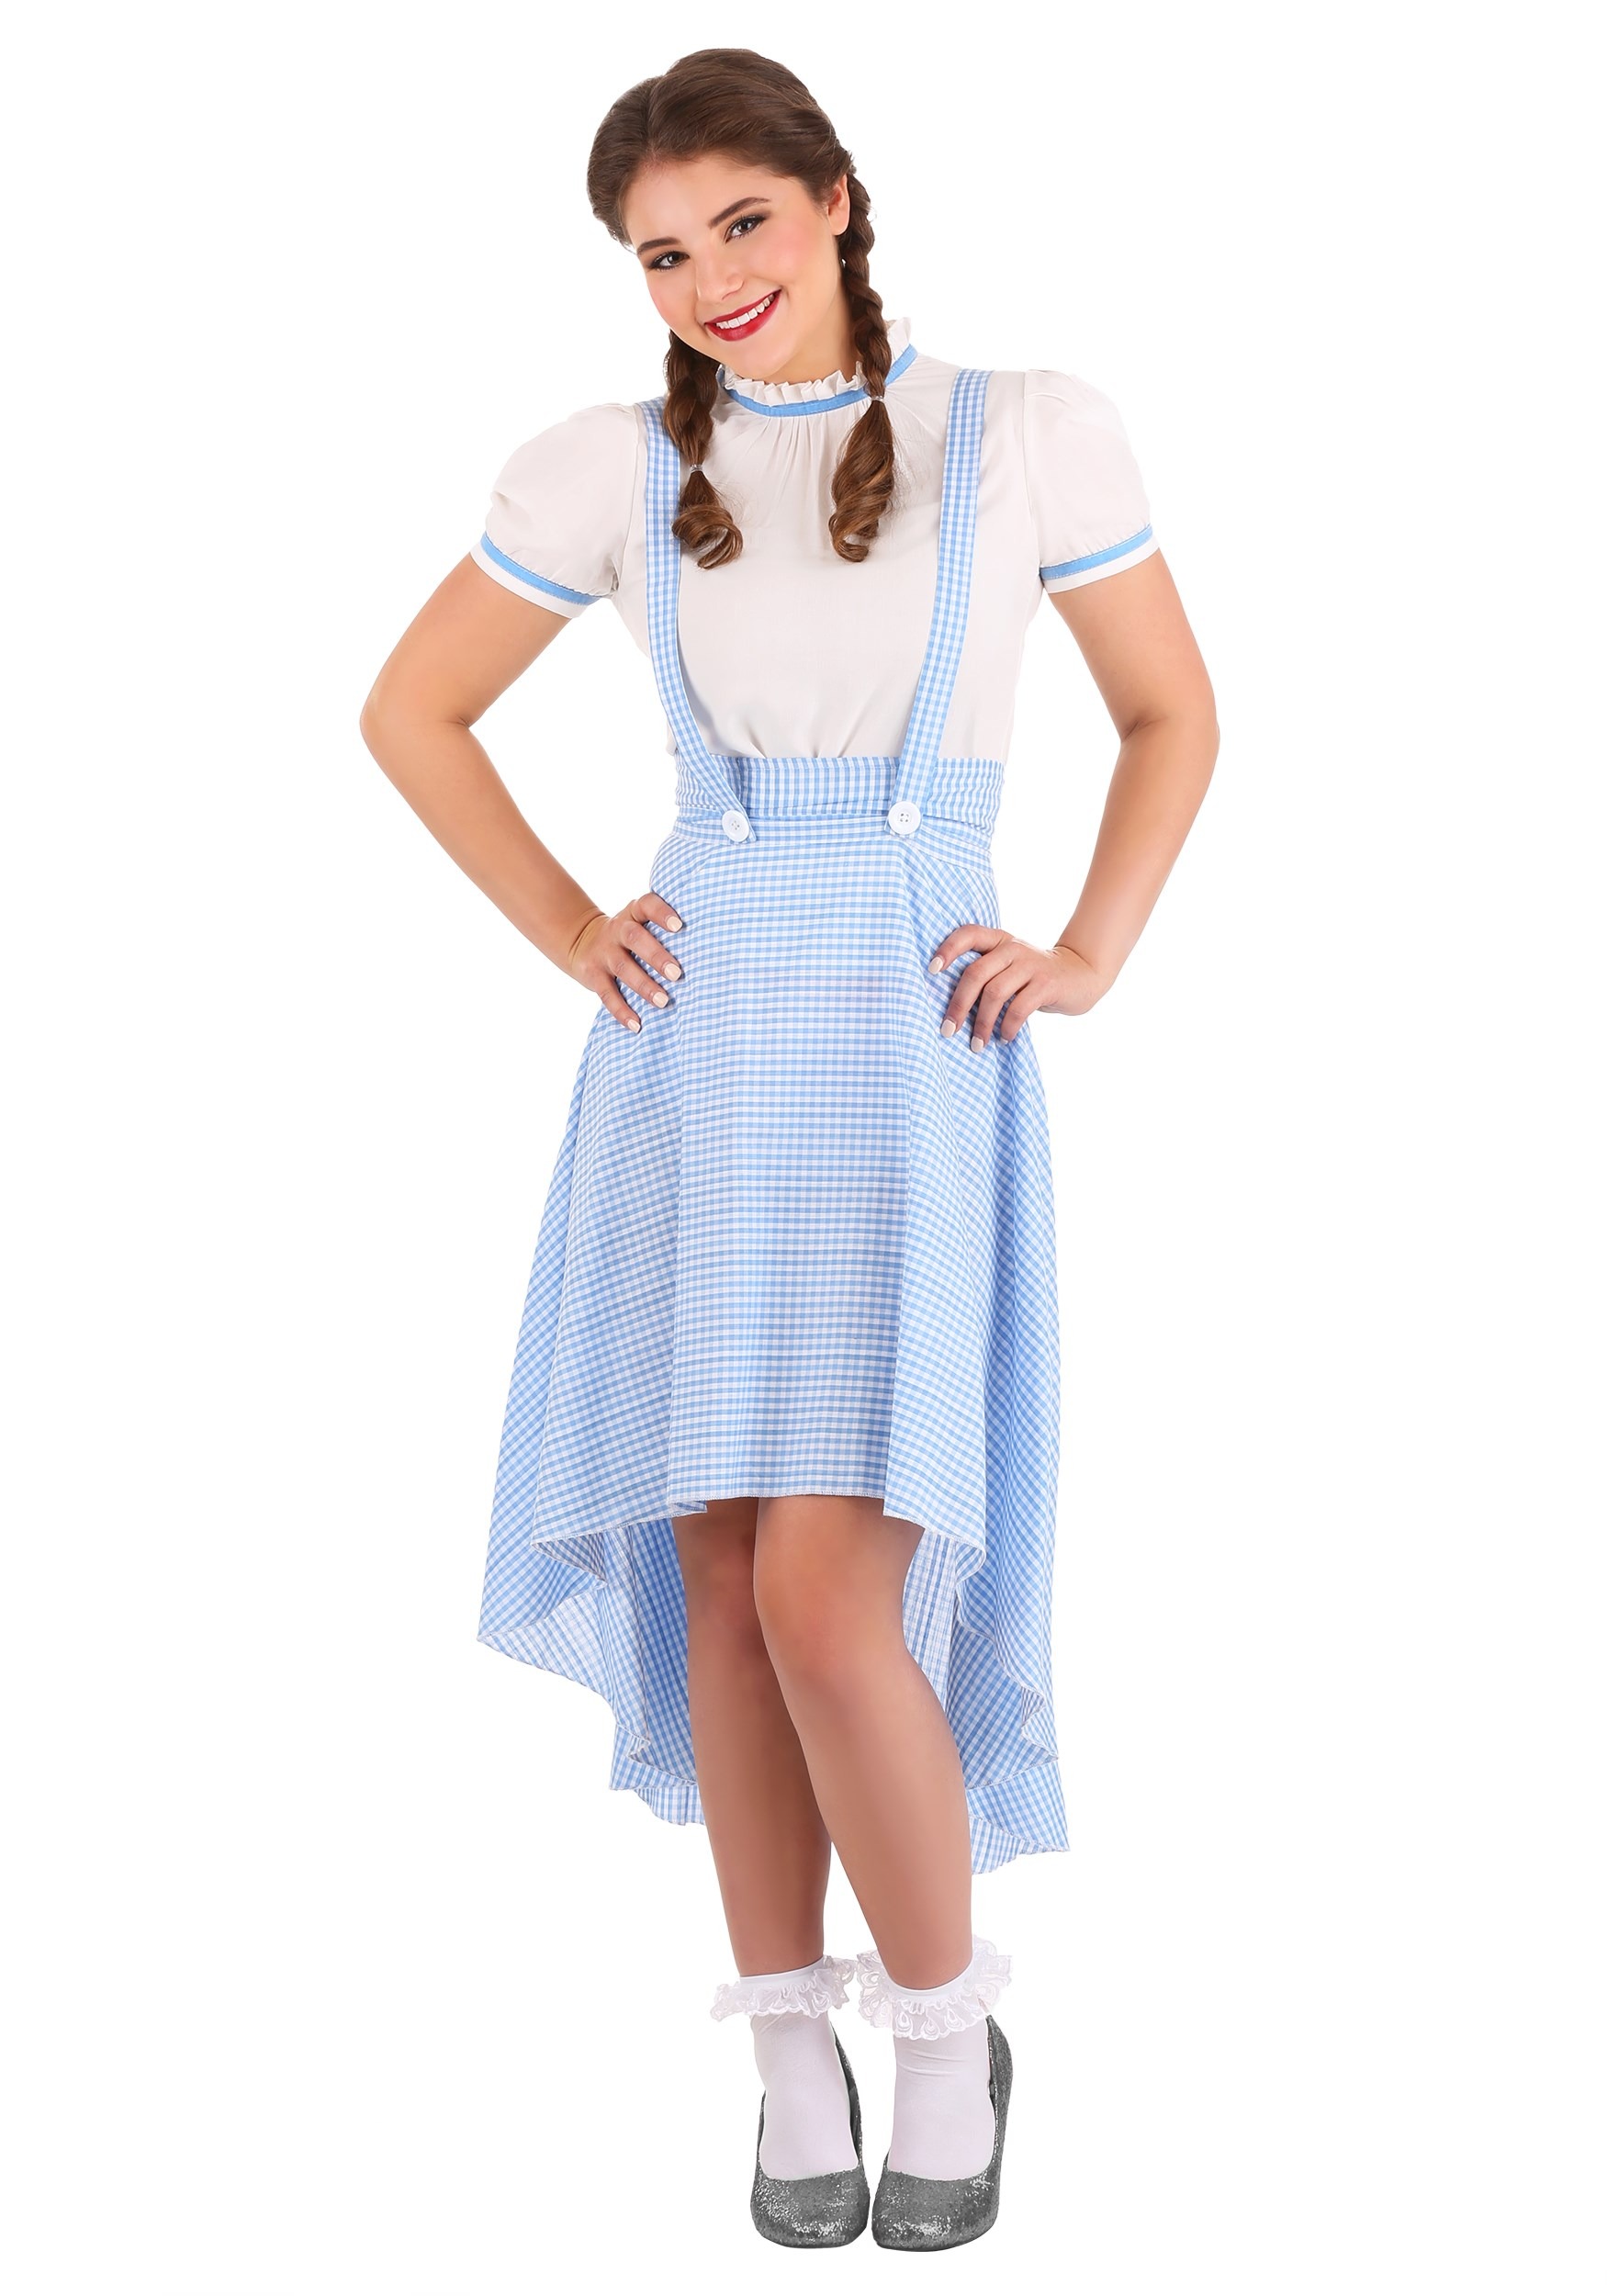 Photos - Fancy Dress FUN Costumes Kansas Girl High Low Costume for Women Blue/White FUN0499